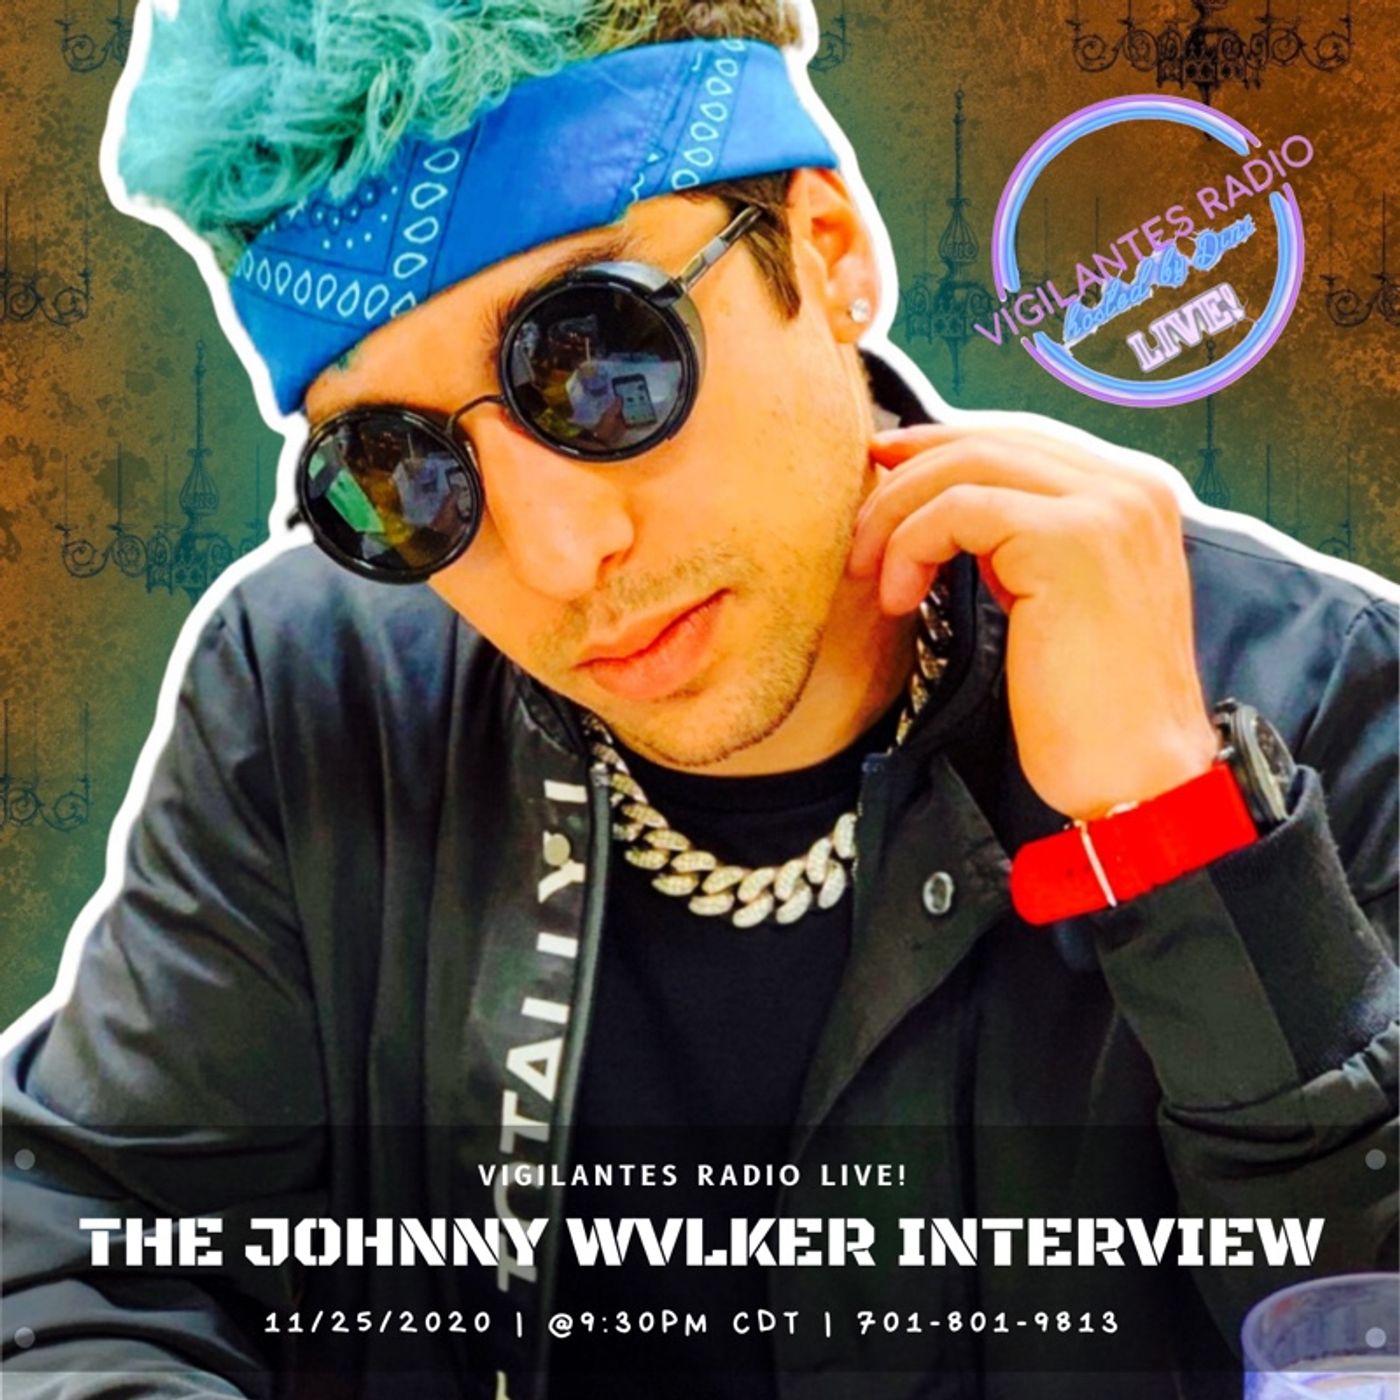 The Johnny Wvlker Interview. Image